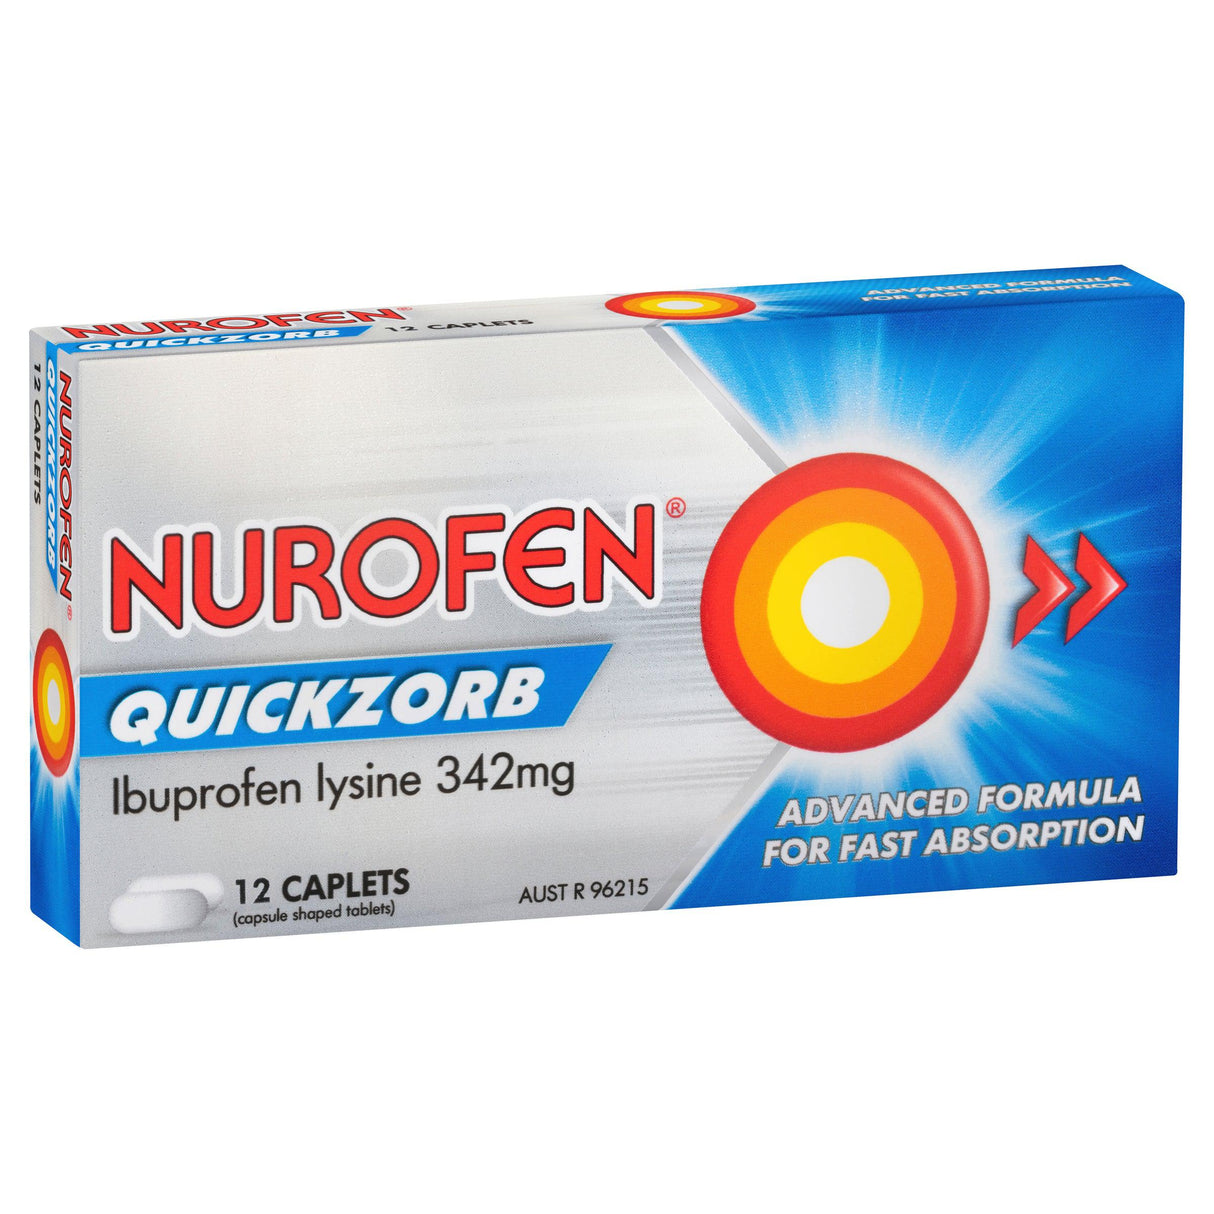 Nurofen Quickzorb Ibuprofen Lysine 342mg Caplets 12 Pack